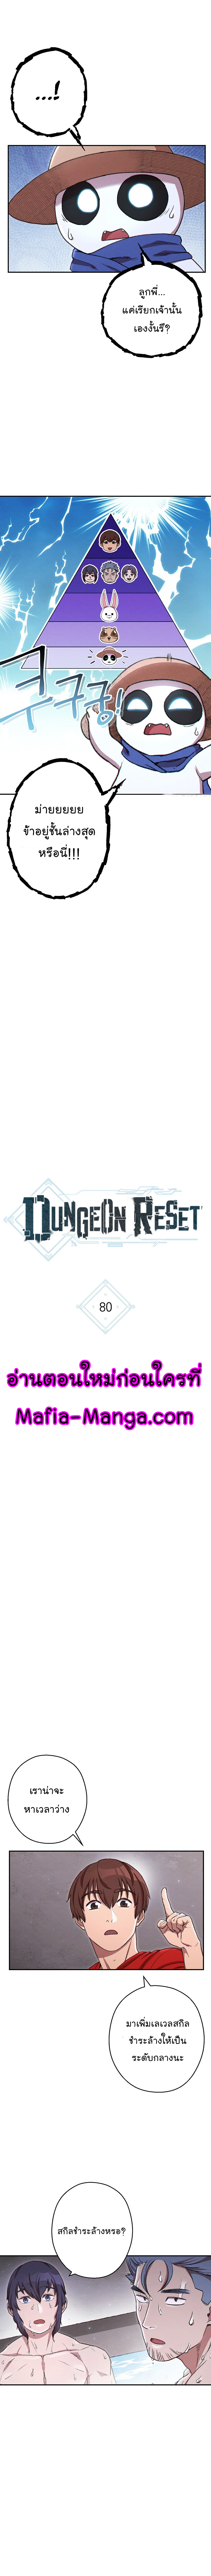 Dungeon Reset 80 02